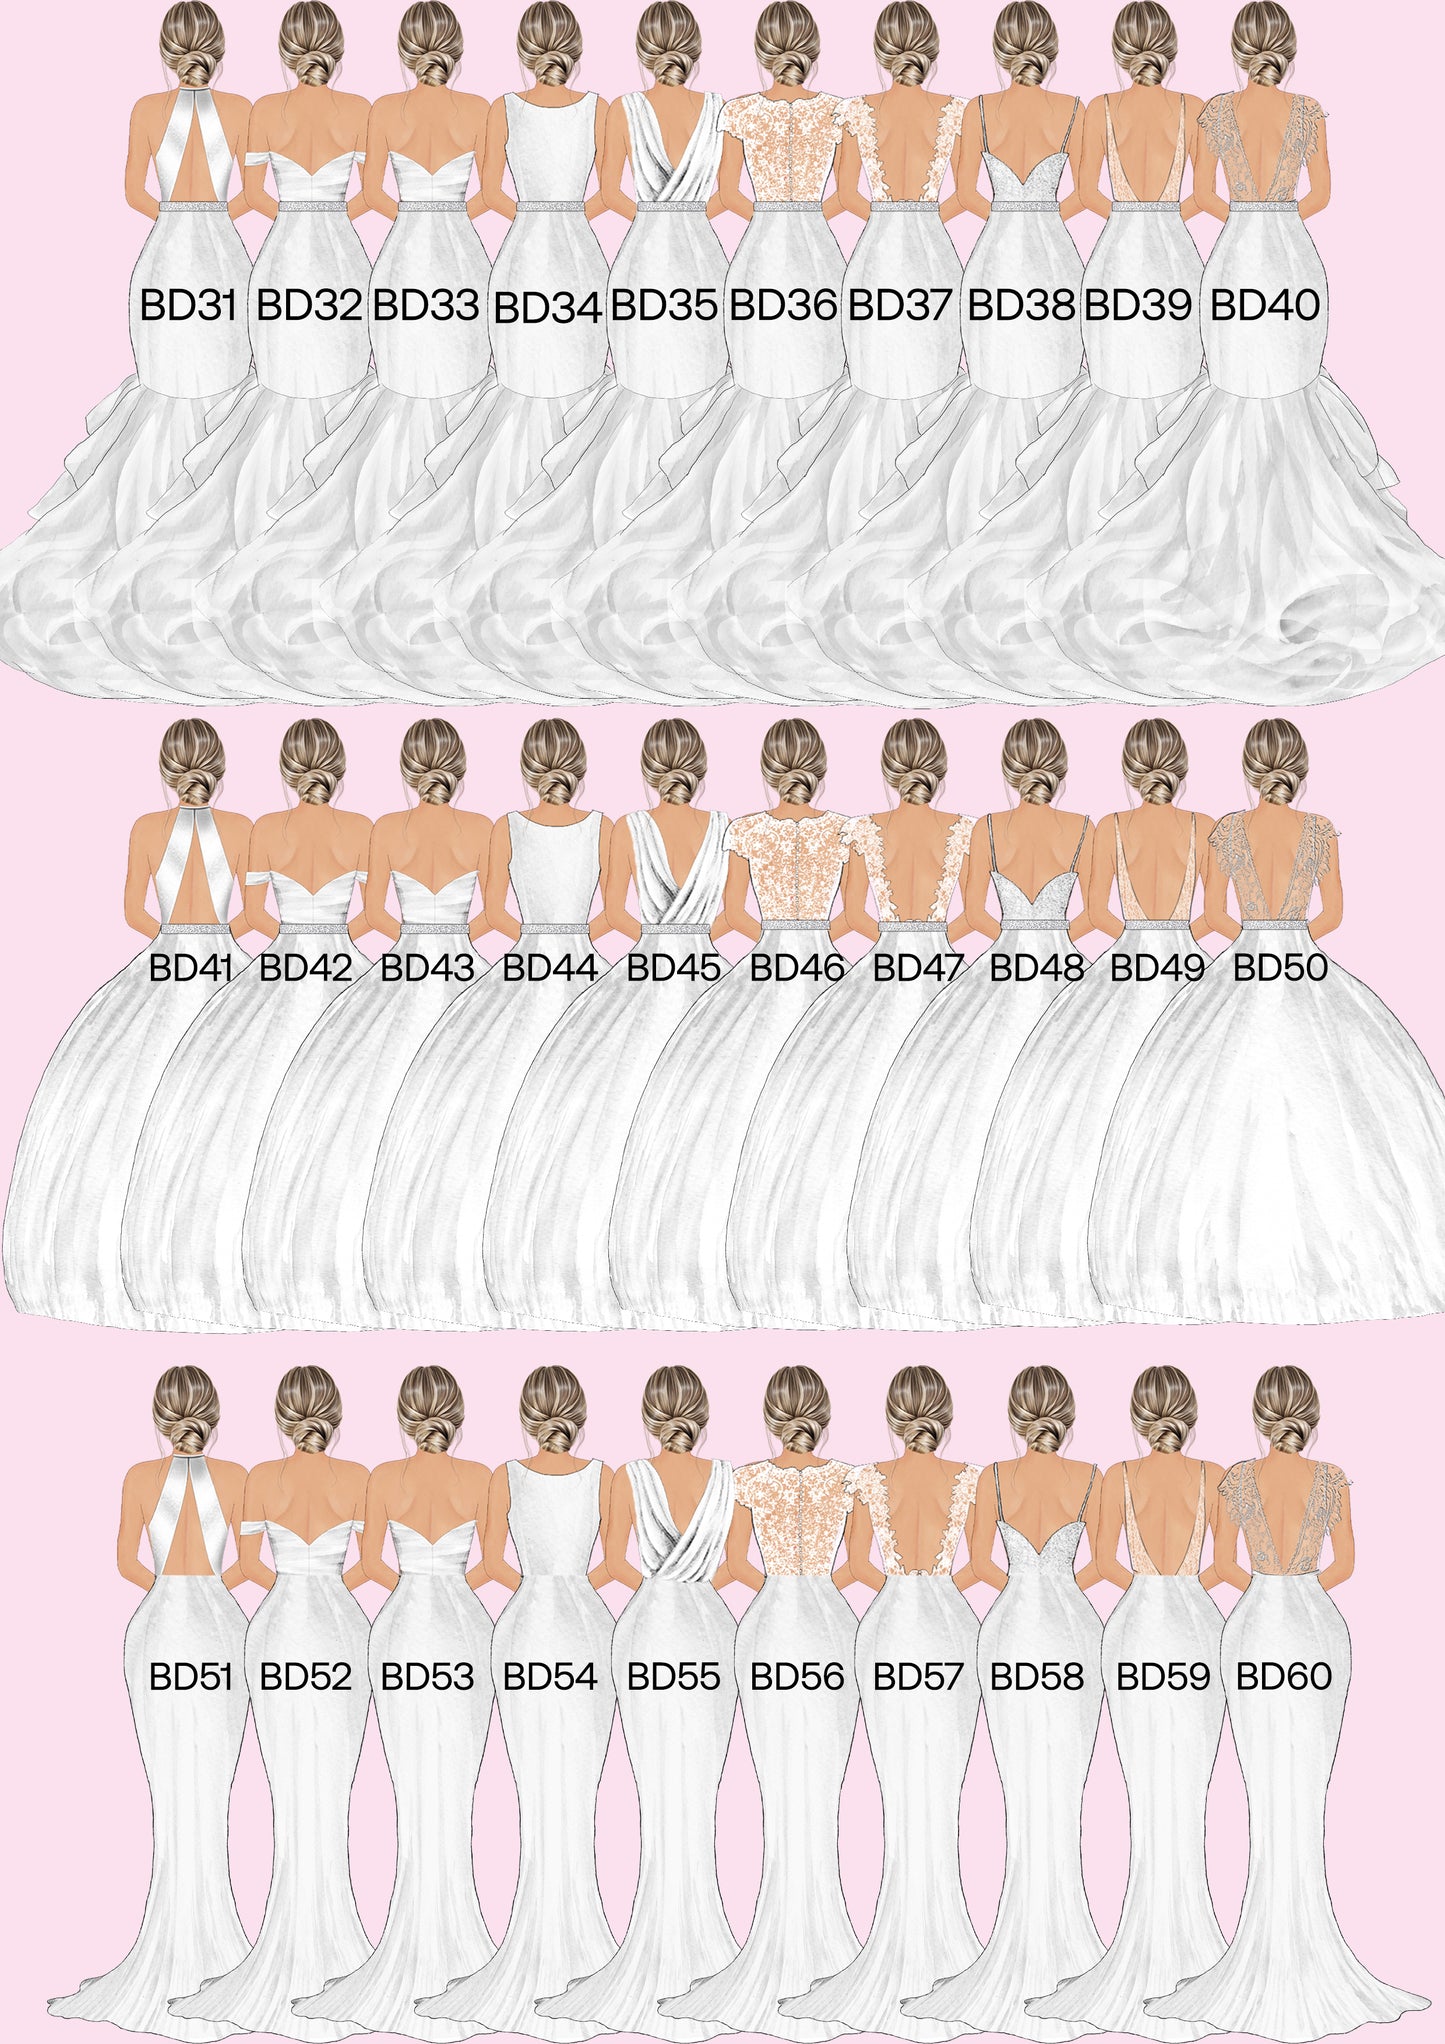 Personalised Bride Squad Illustration Print